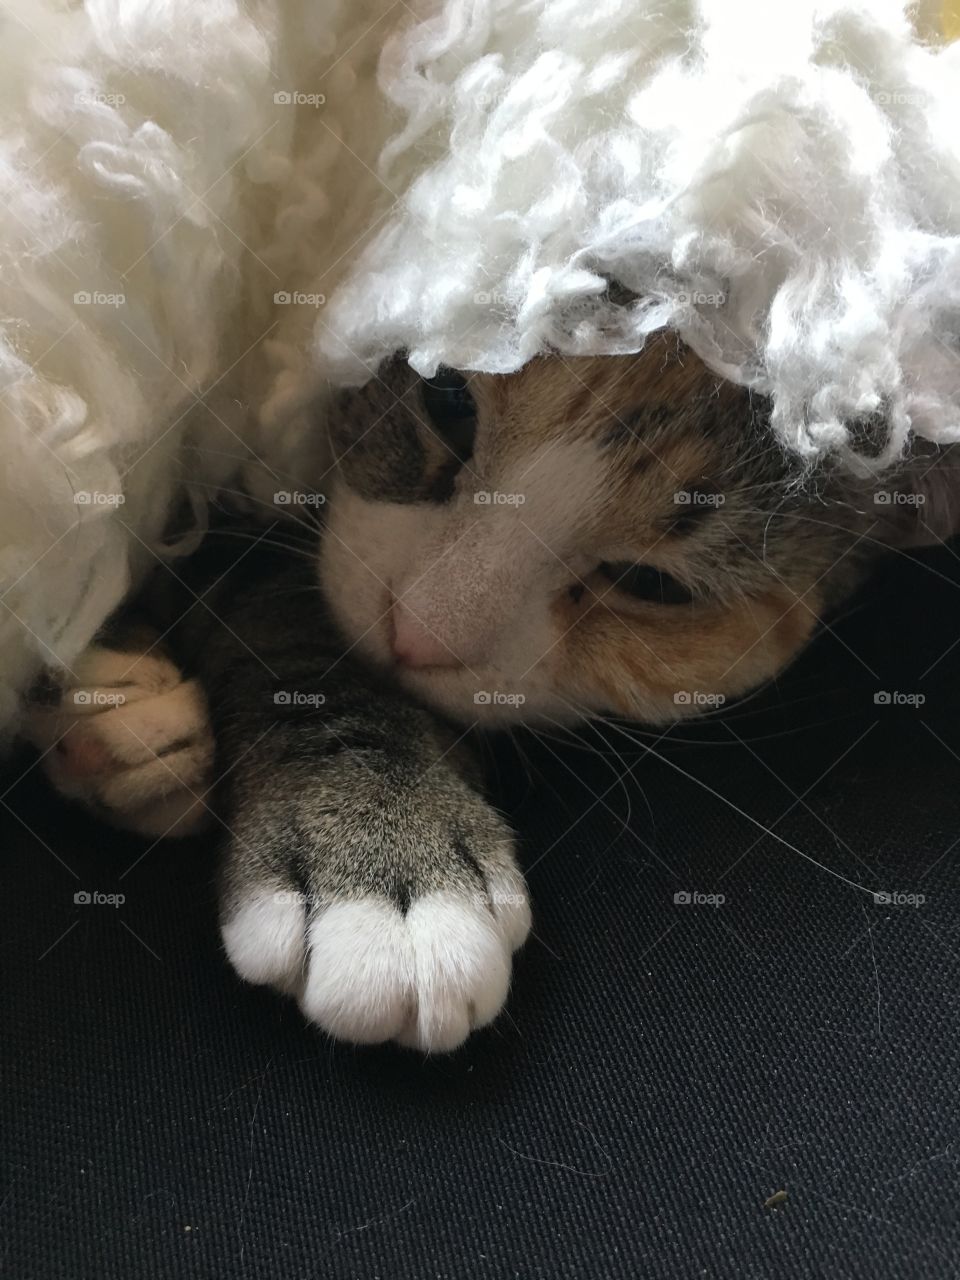 Sleepy kitten peaking out from under a blanket.